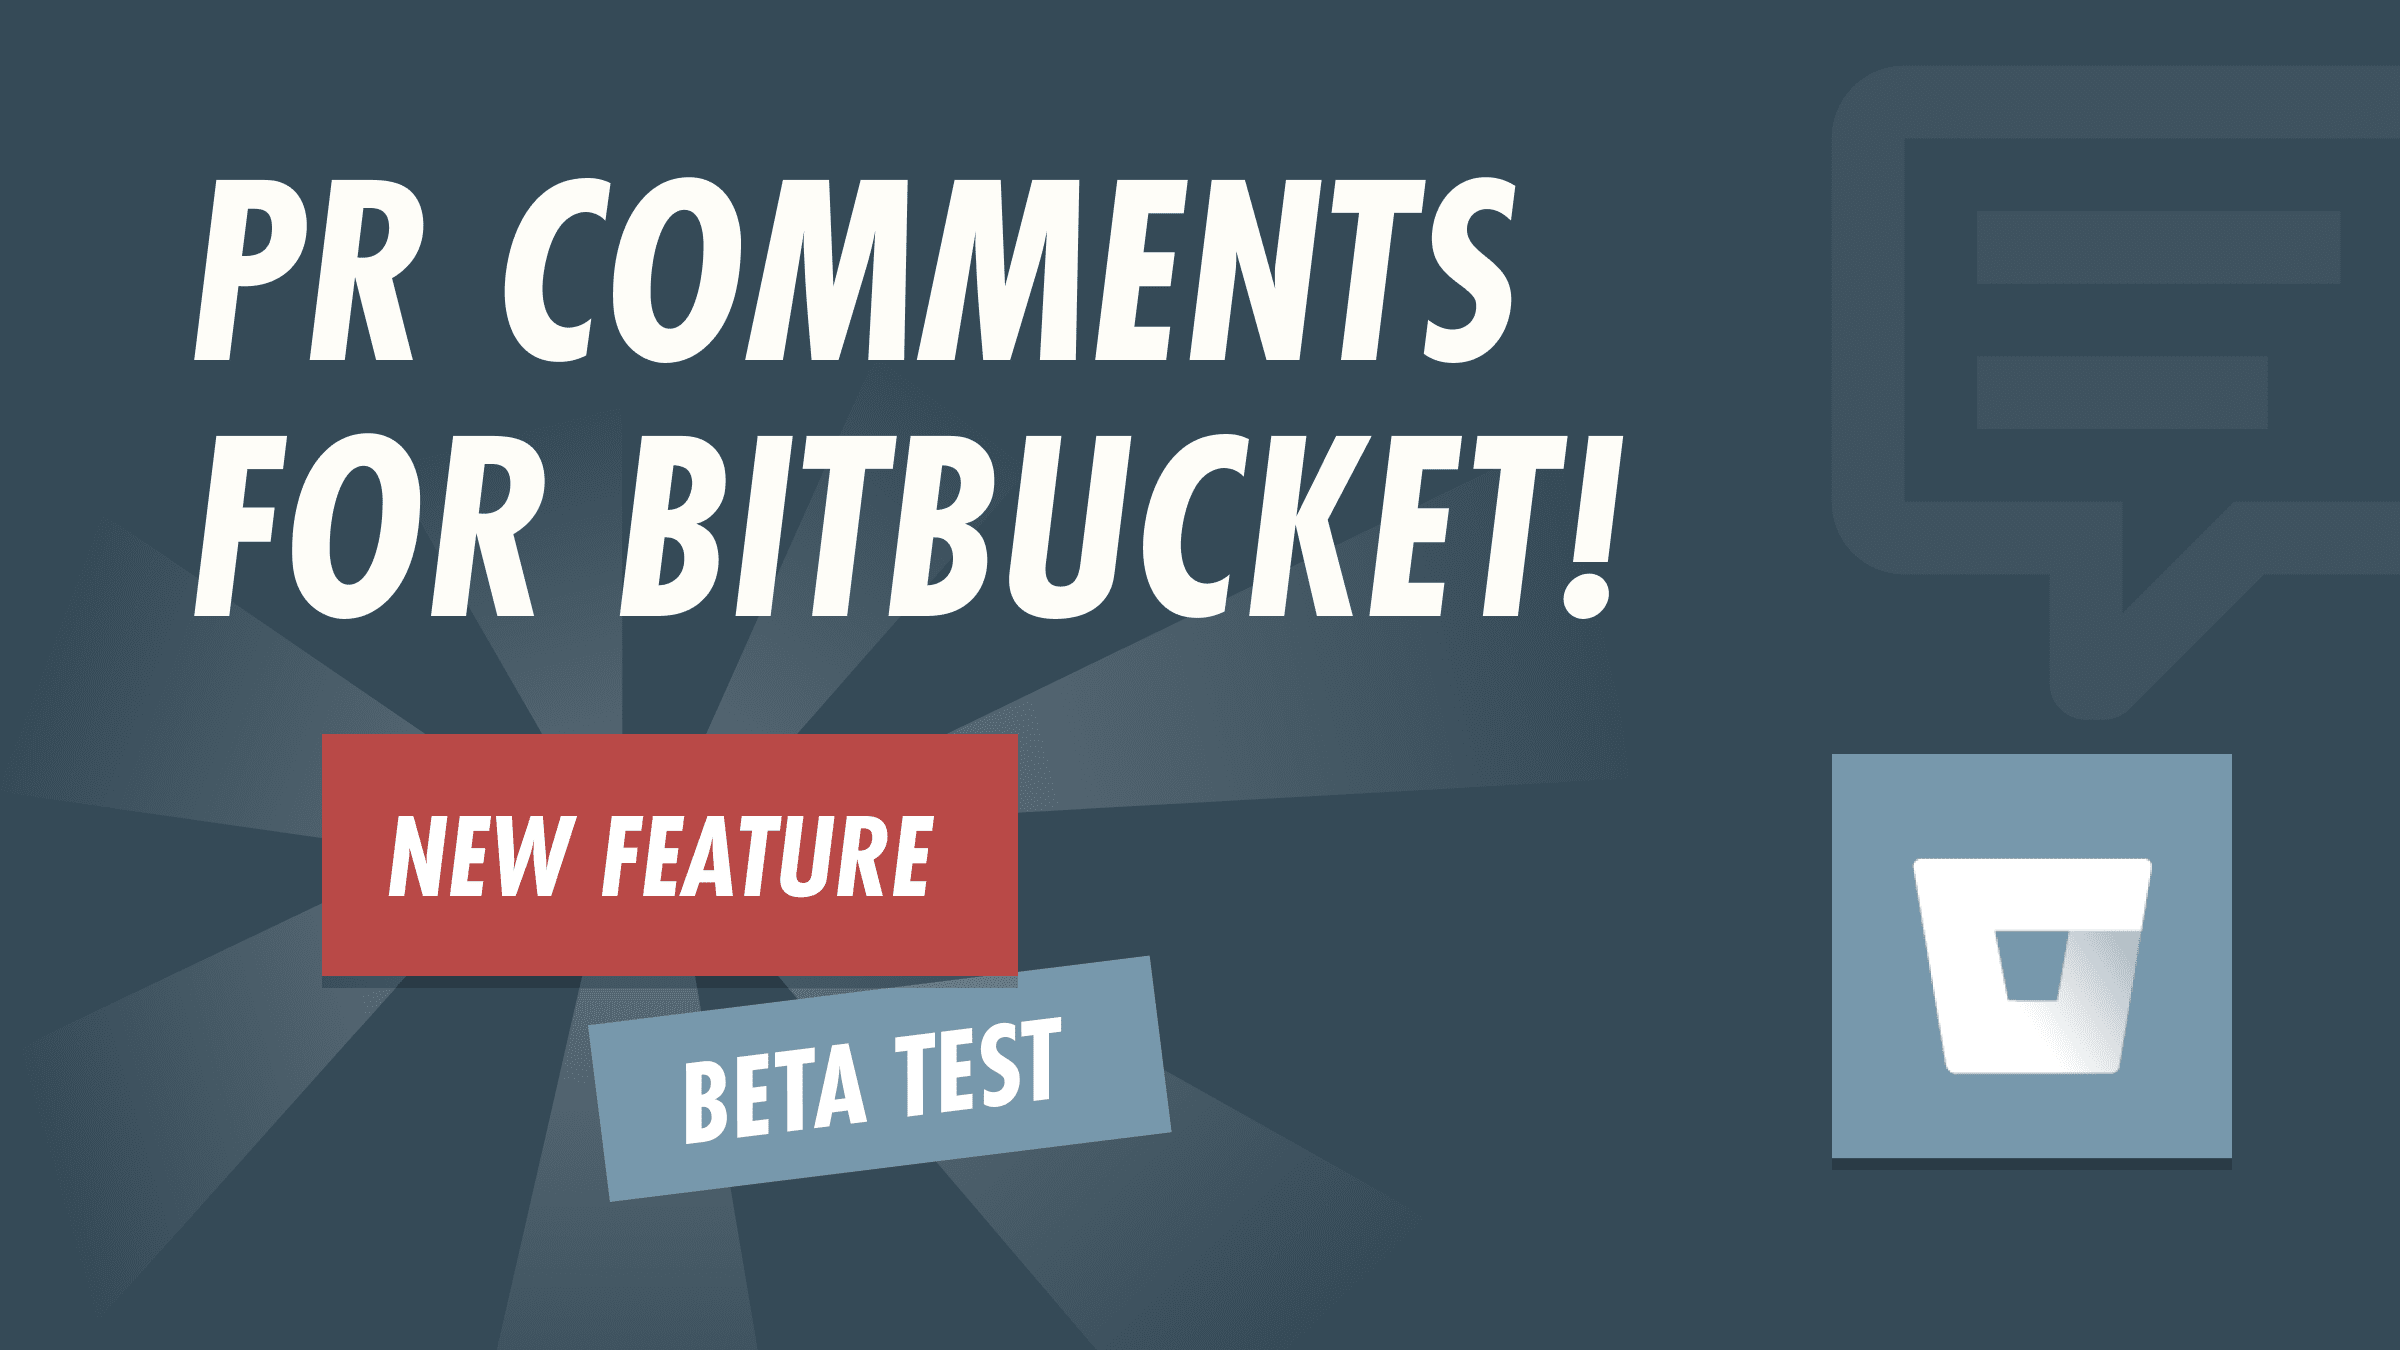 Bitbucket pr comments banner hires